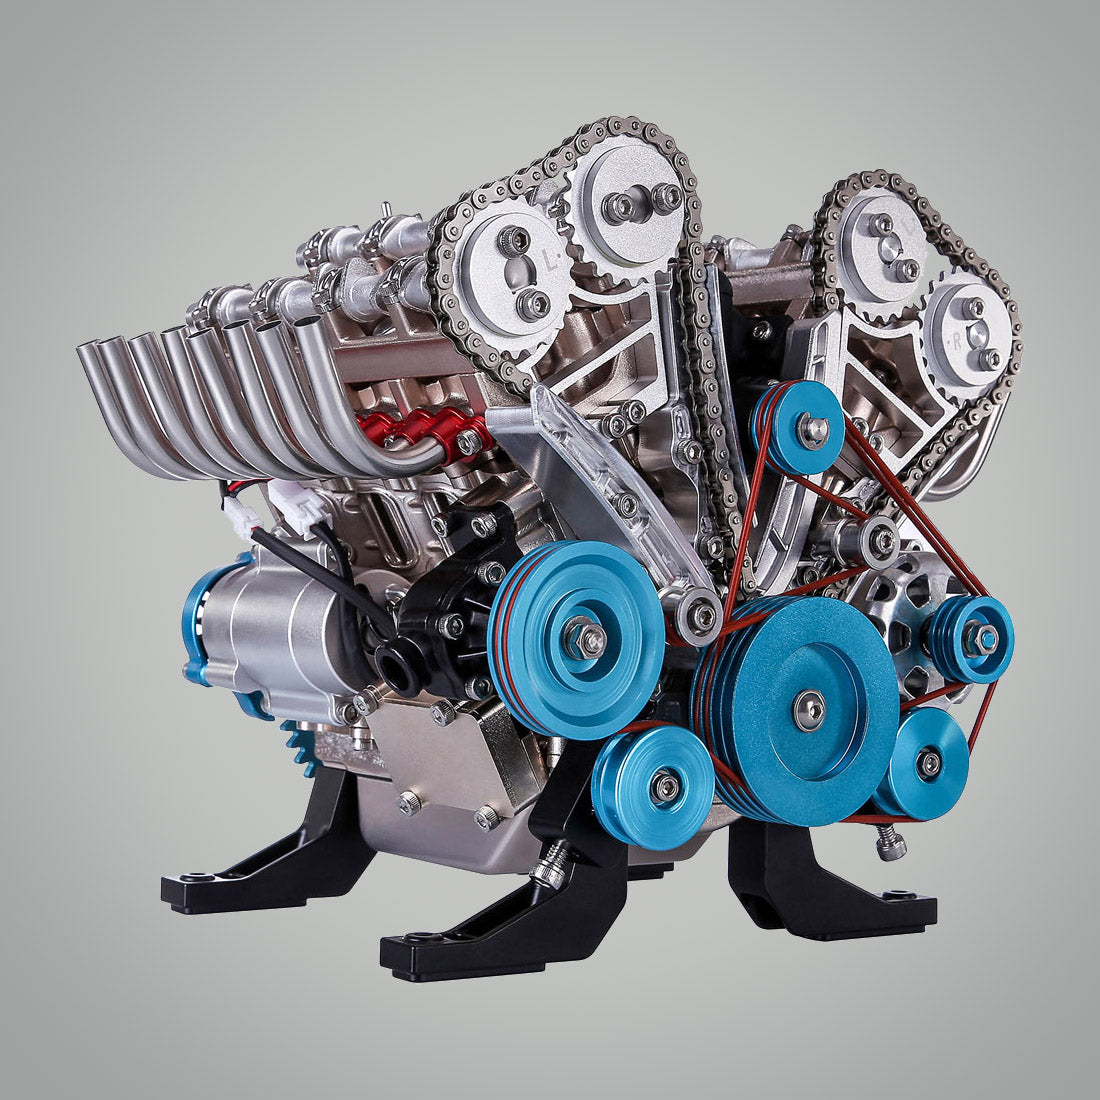 Build Your Own V8 Engine, The TECHING V8 Engine Model Of Dedicated Craftsmanship.